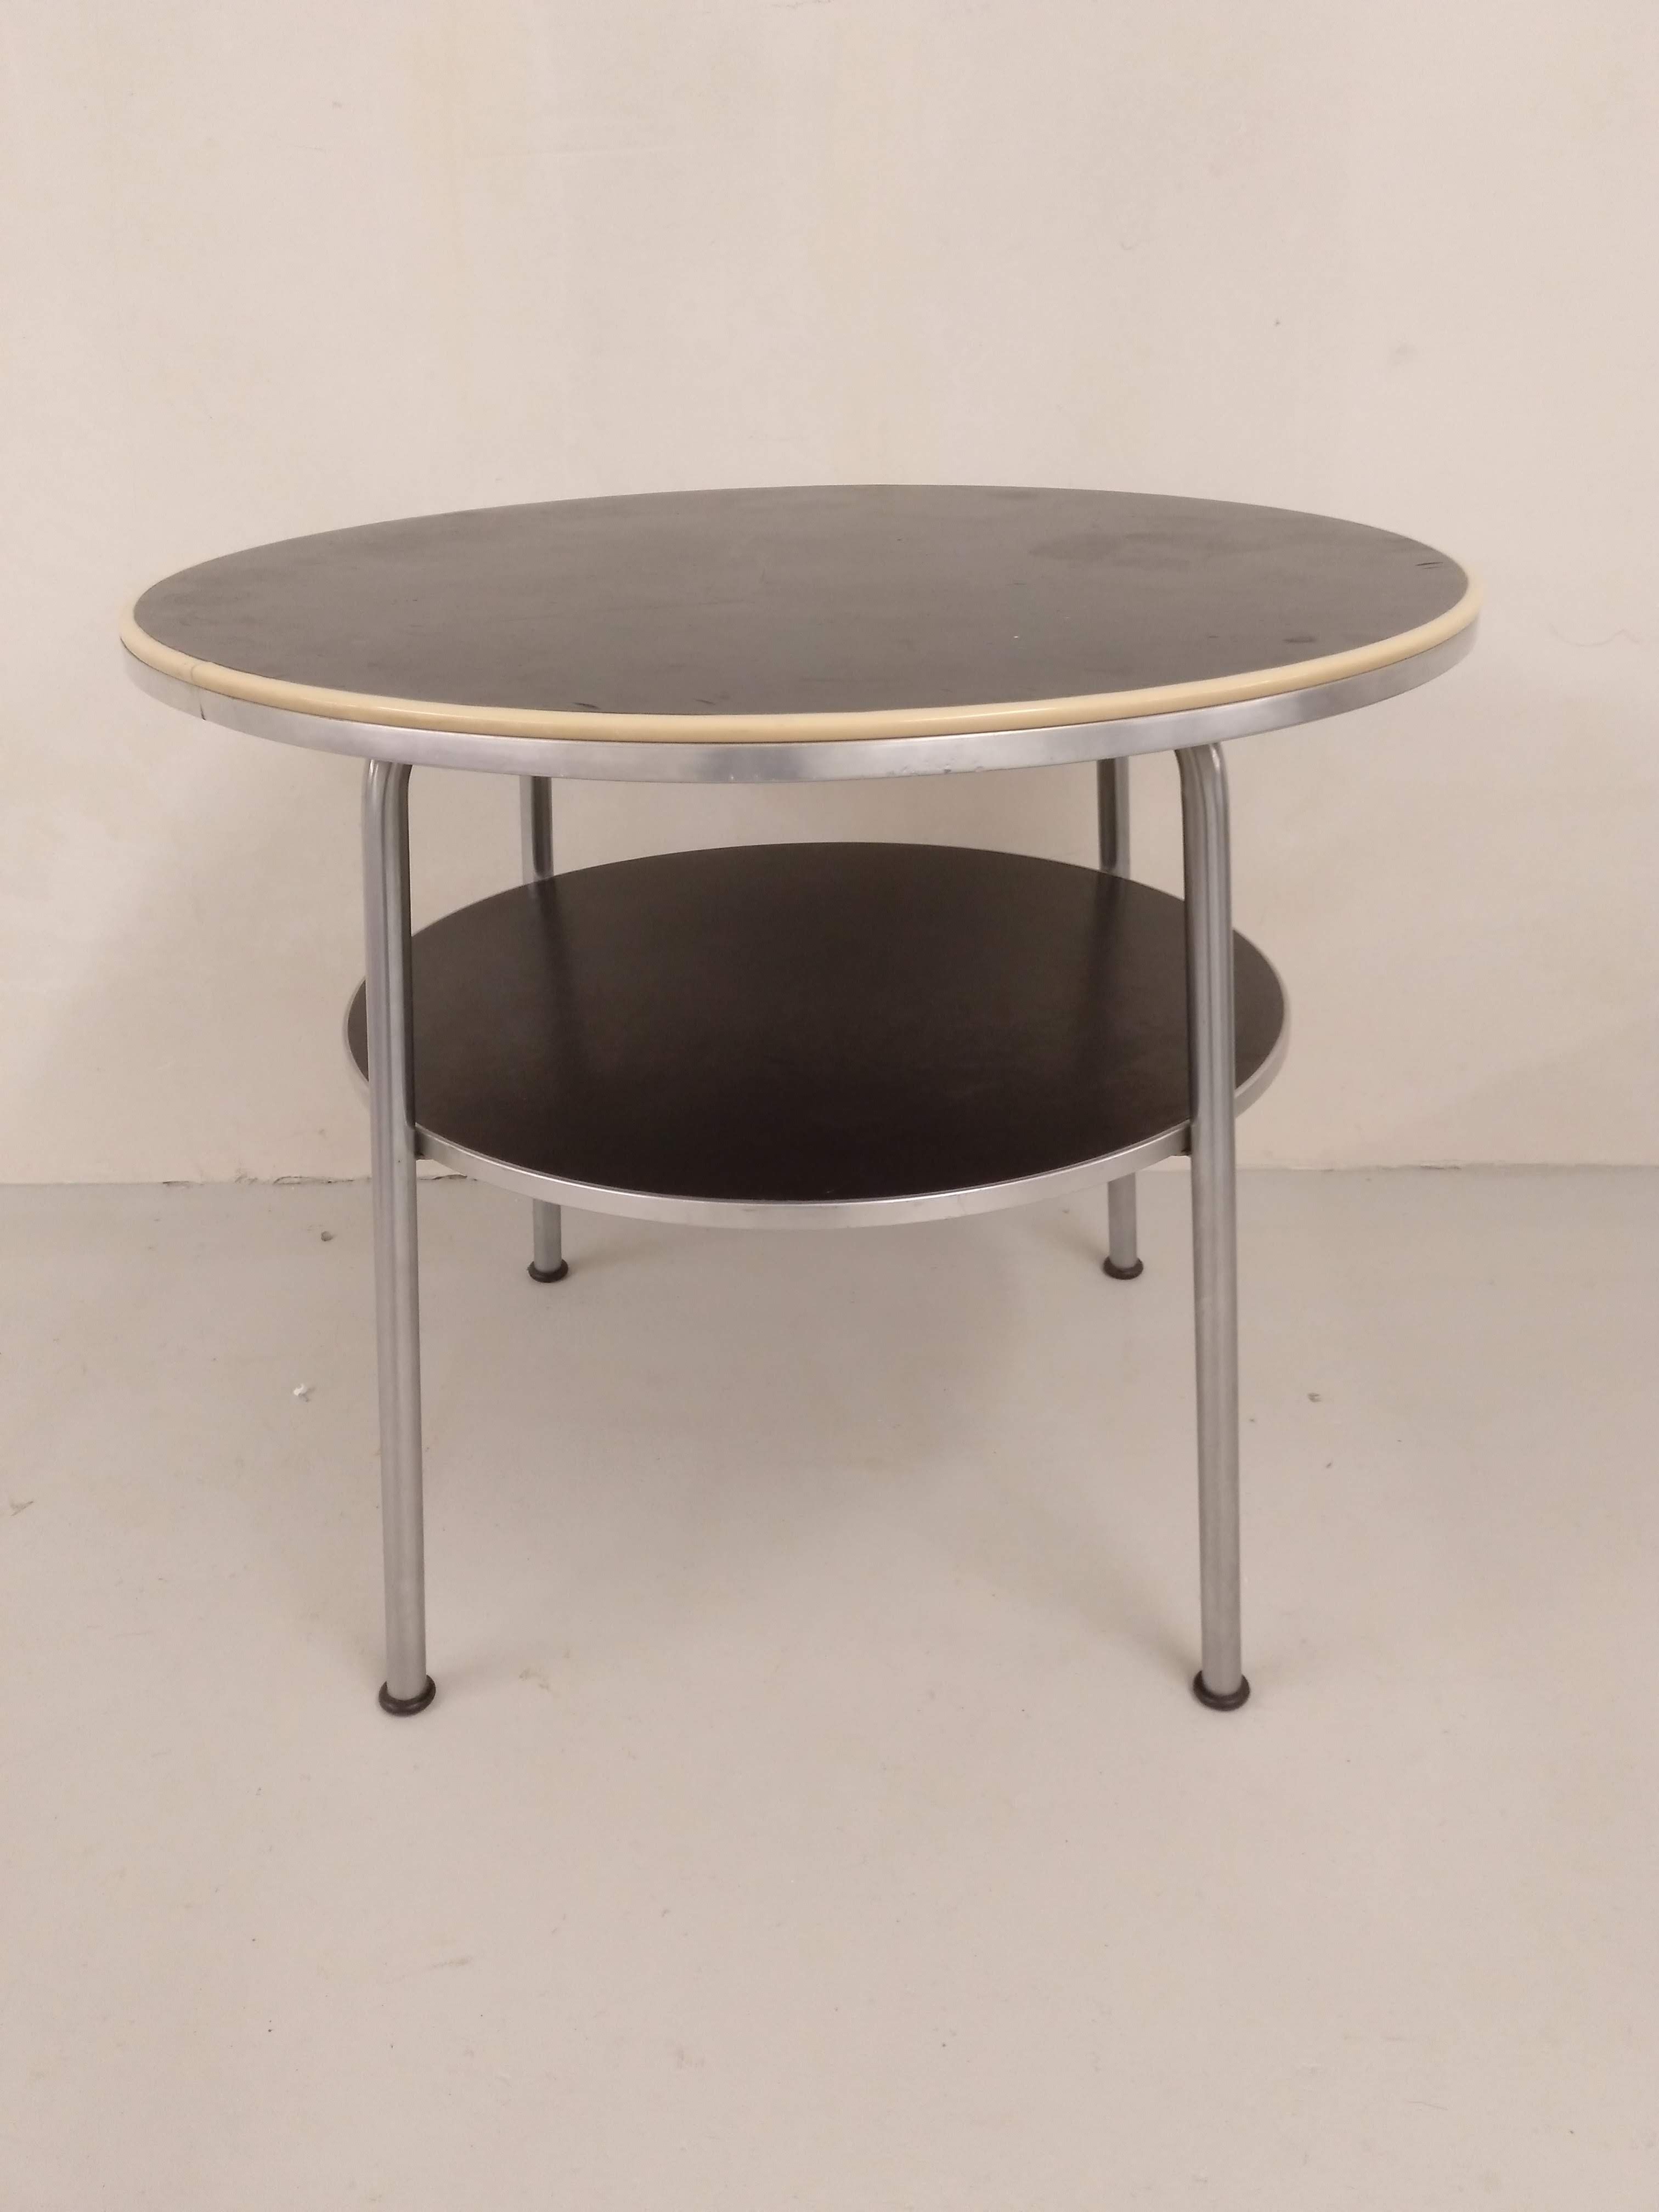 ethiek Ploeg Transparant El Vinta: Side table Gispen (Furniture, Design)